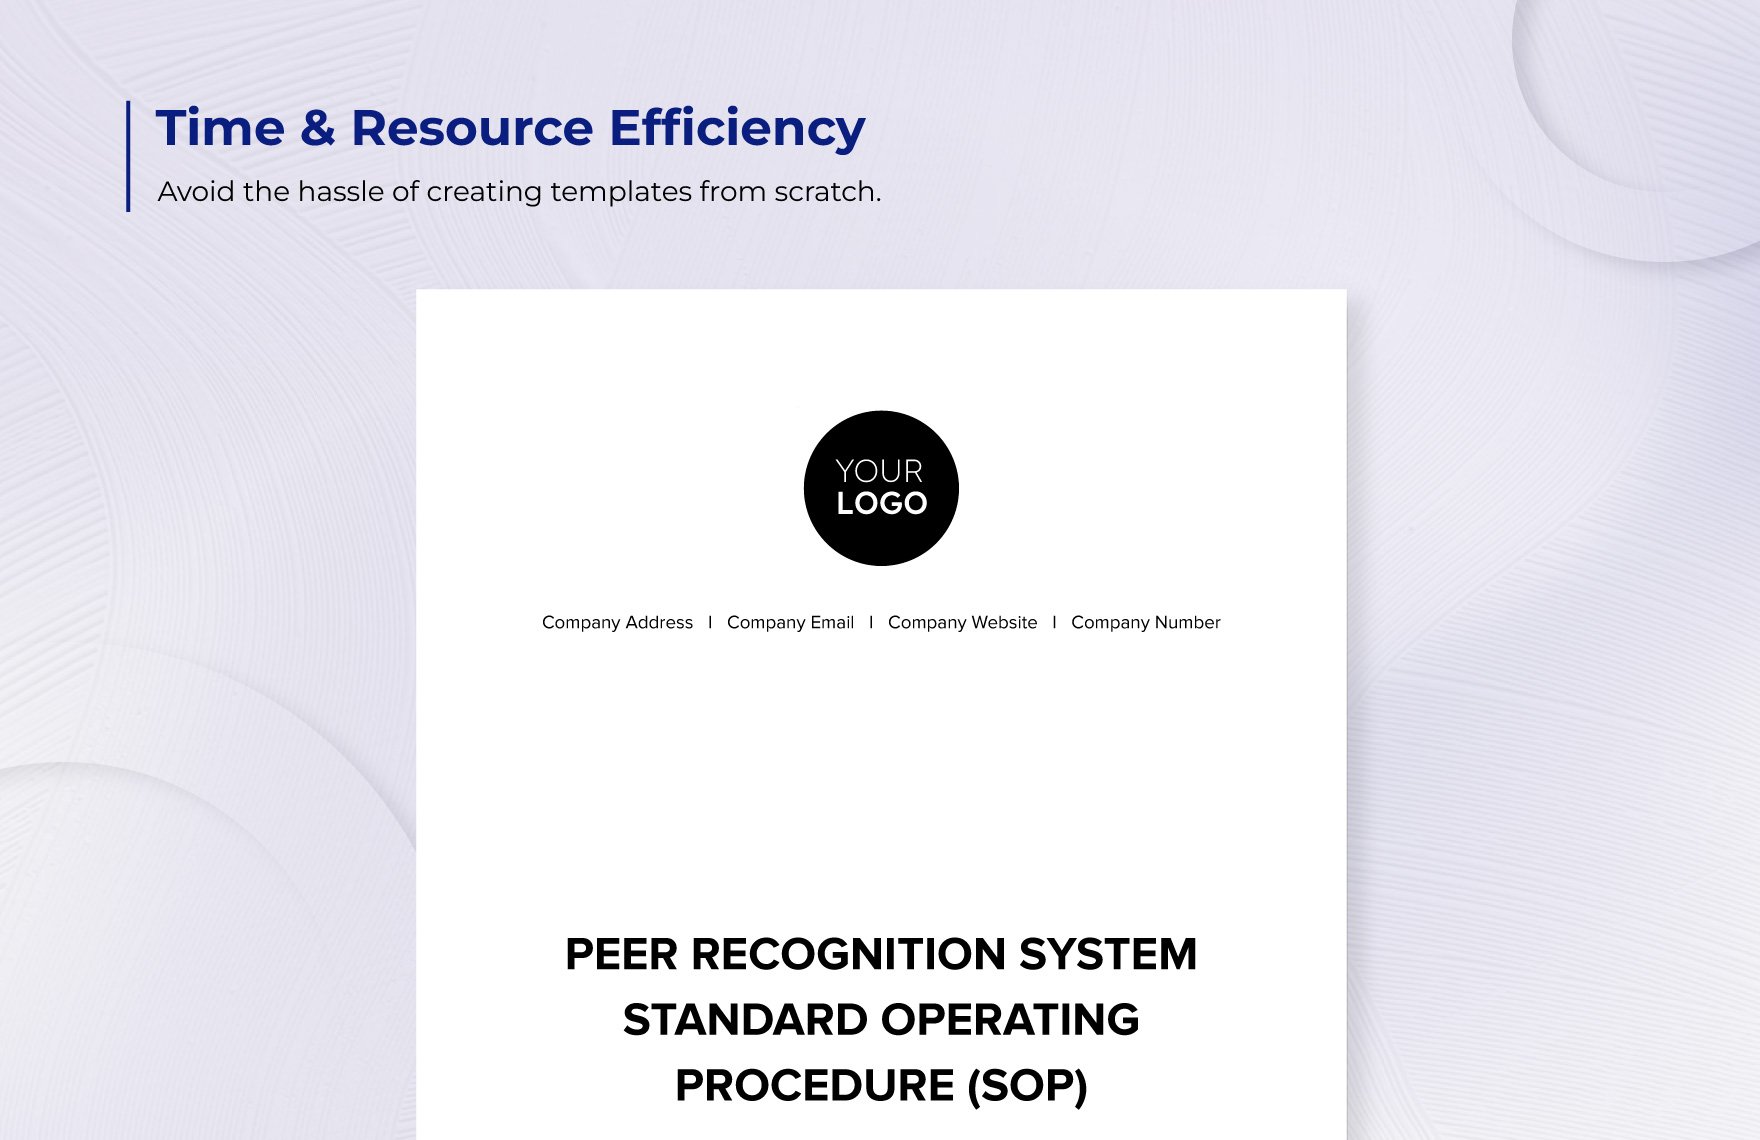 Peer Recognition System Standard Operating Procedure (SOP) HR Template